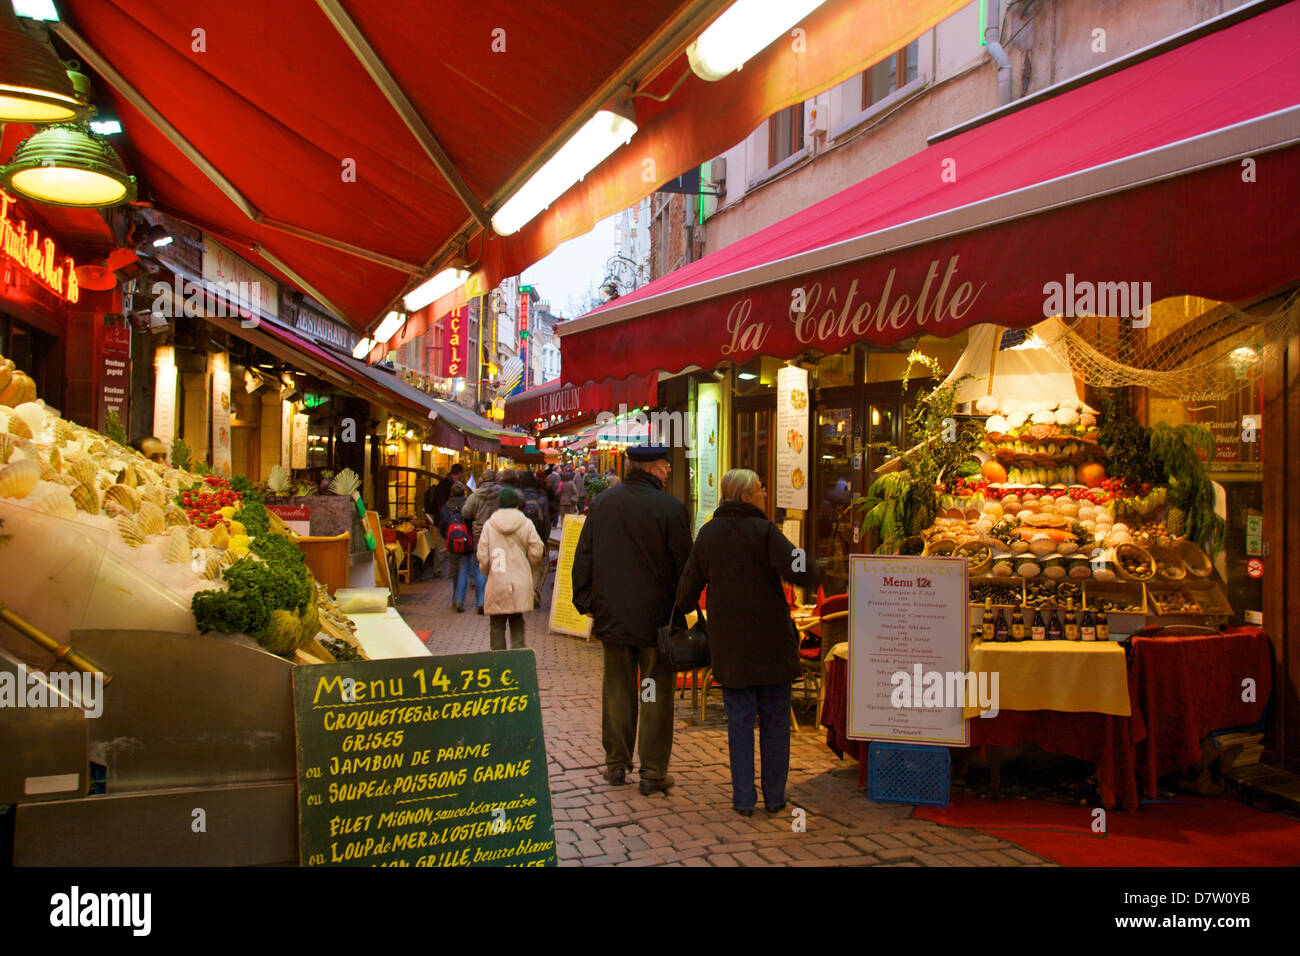 Restaurants in Rue des Bouchers, Brussels, Belgium Stock Photo